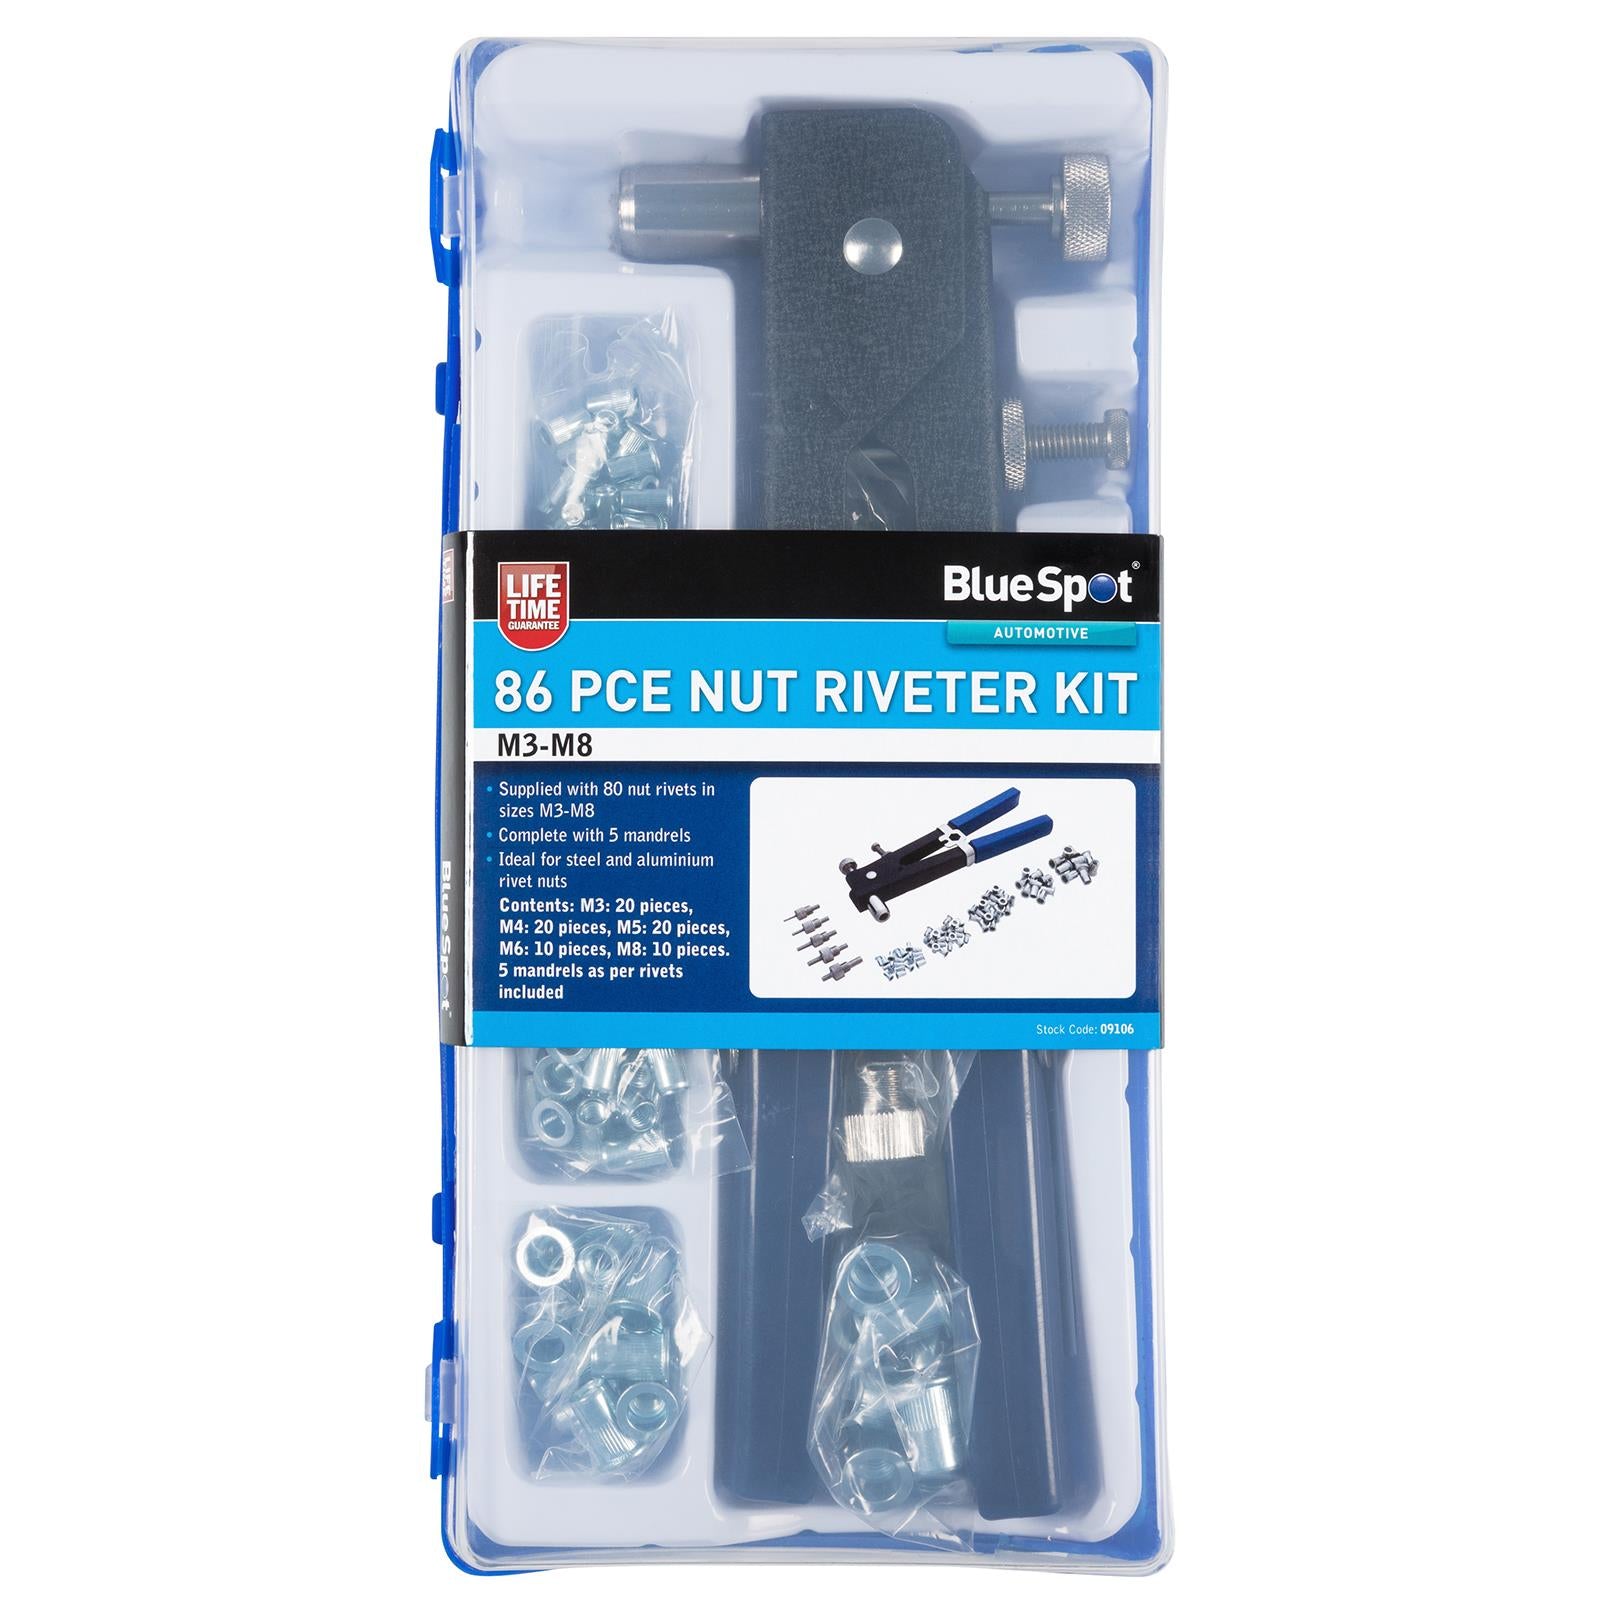 BlueSpot Nut Riveter Kit 86 Piece M3-M8 in Storage Case